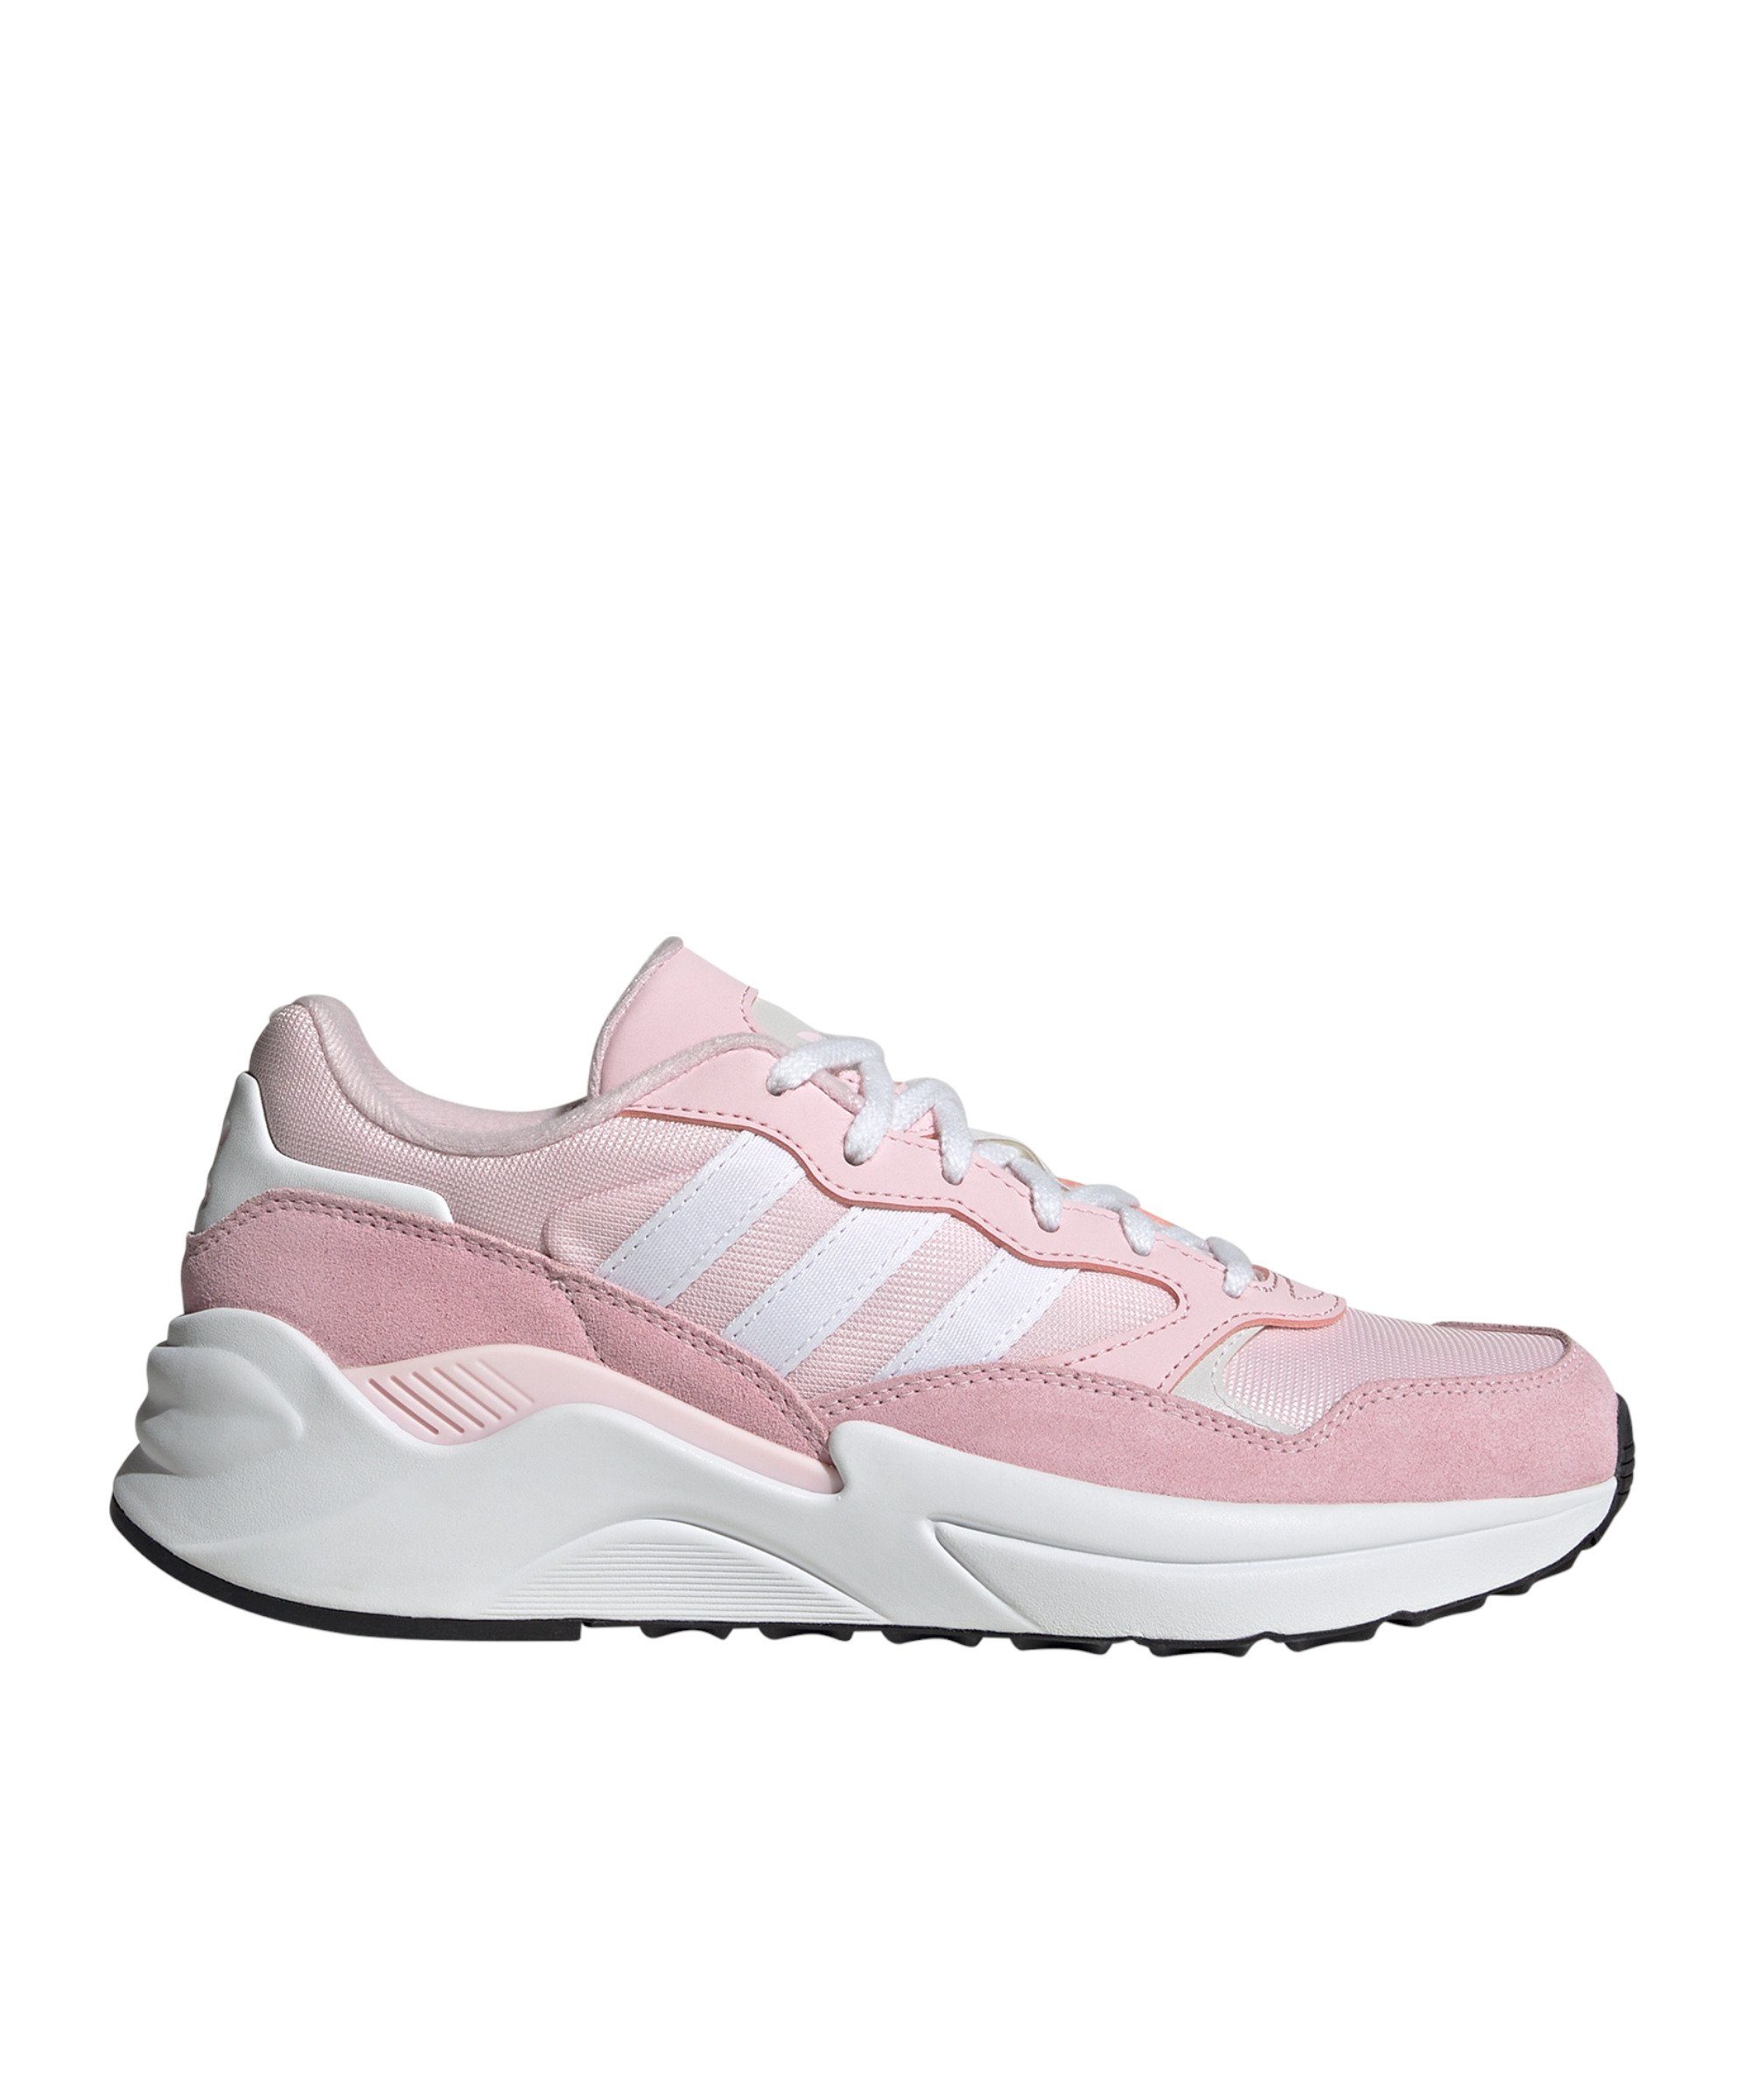 adidas Originals Retropy Sneaker Damen pinkweisspink Adisuper